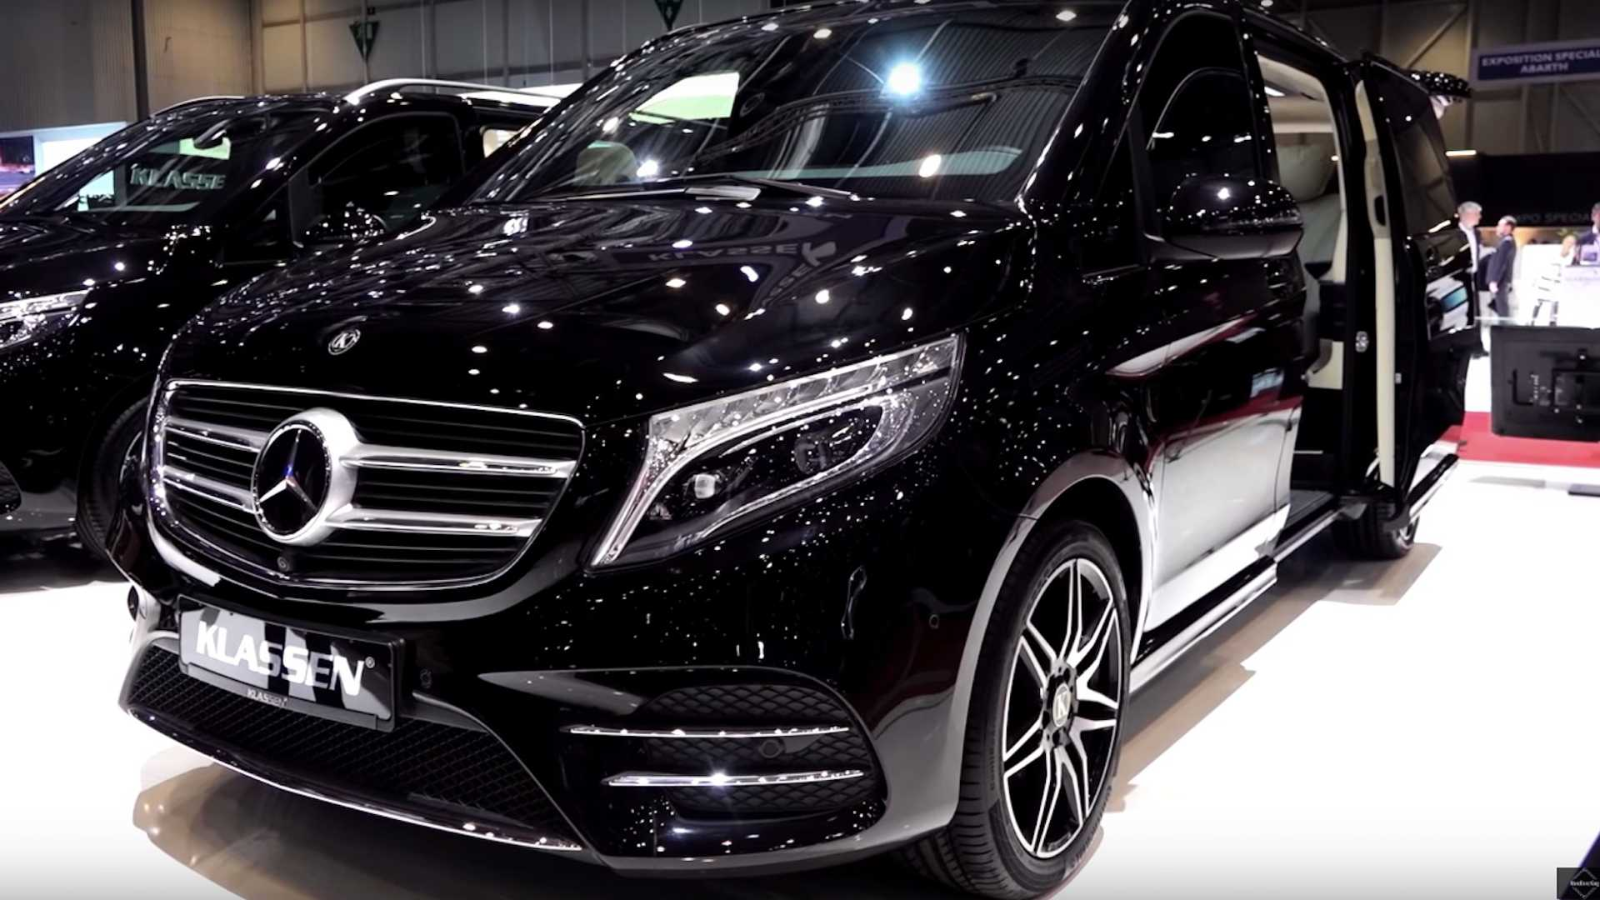 Flashback: Klassen Mercedes V-Class is Ultimate Luxury